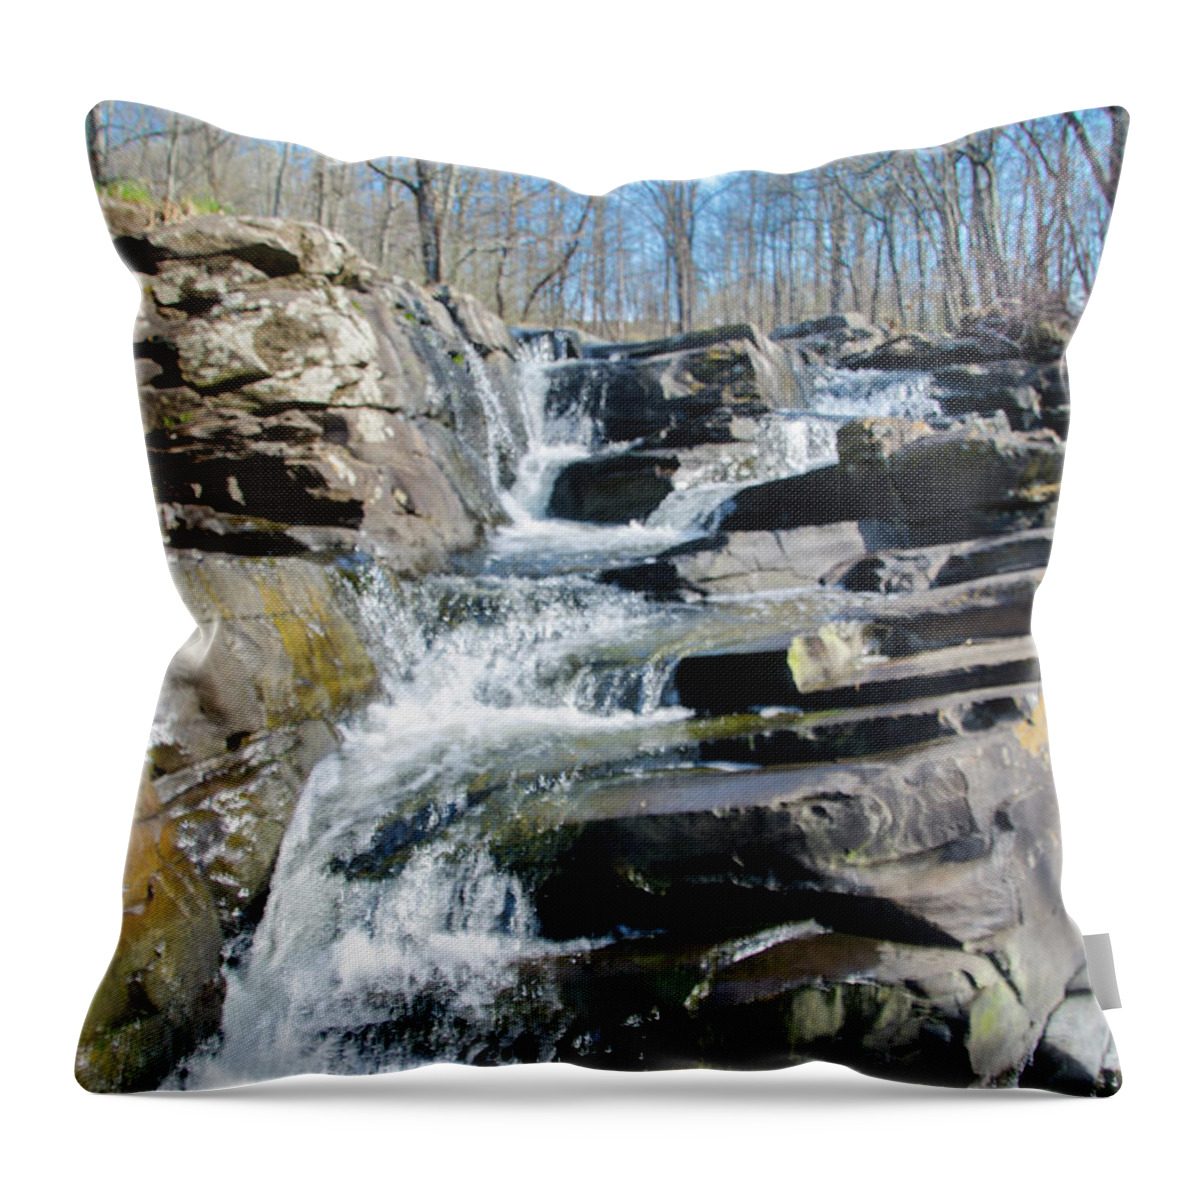 Wickecheoke Throw Pillow featuring the photograph Wickecheoke Creek Waterfall by Bill Cannon